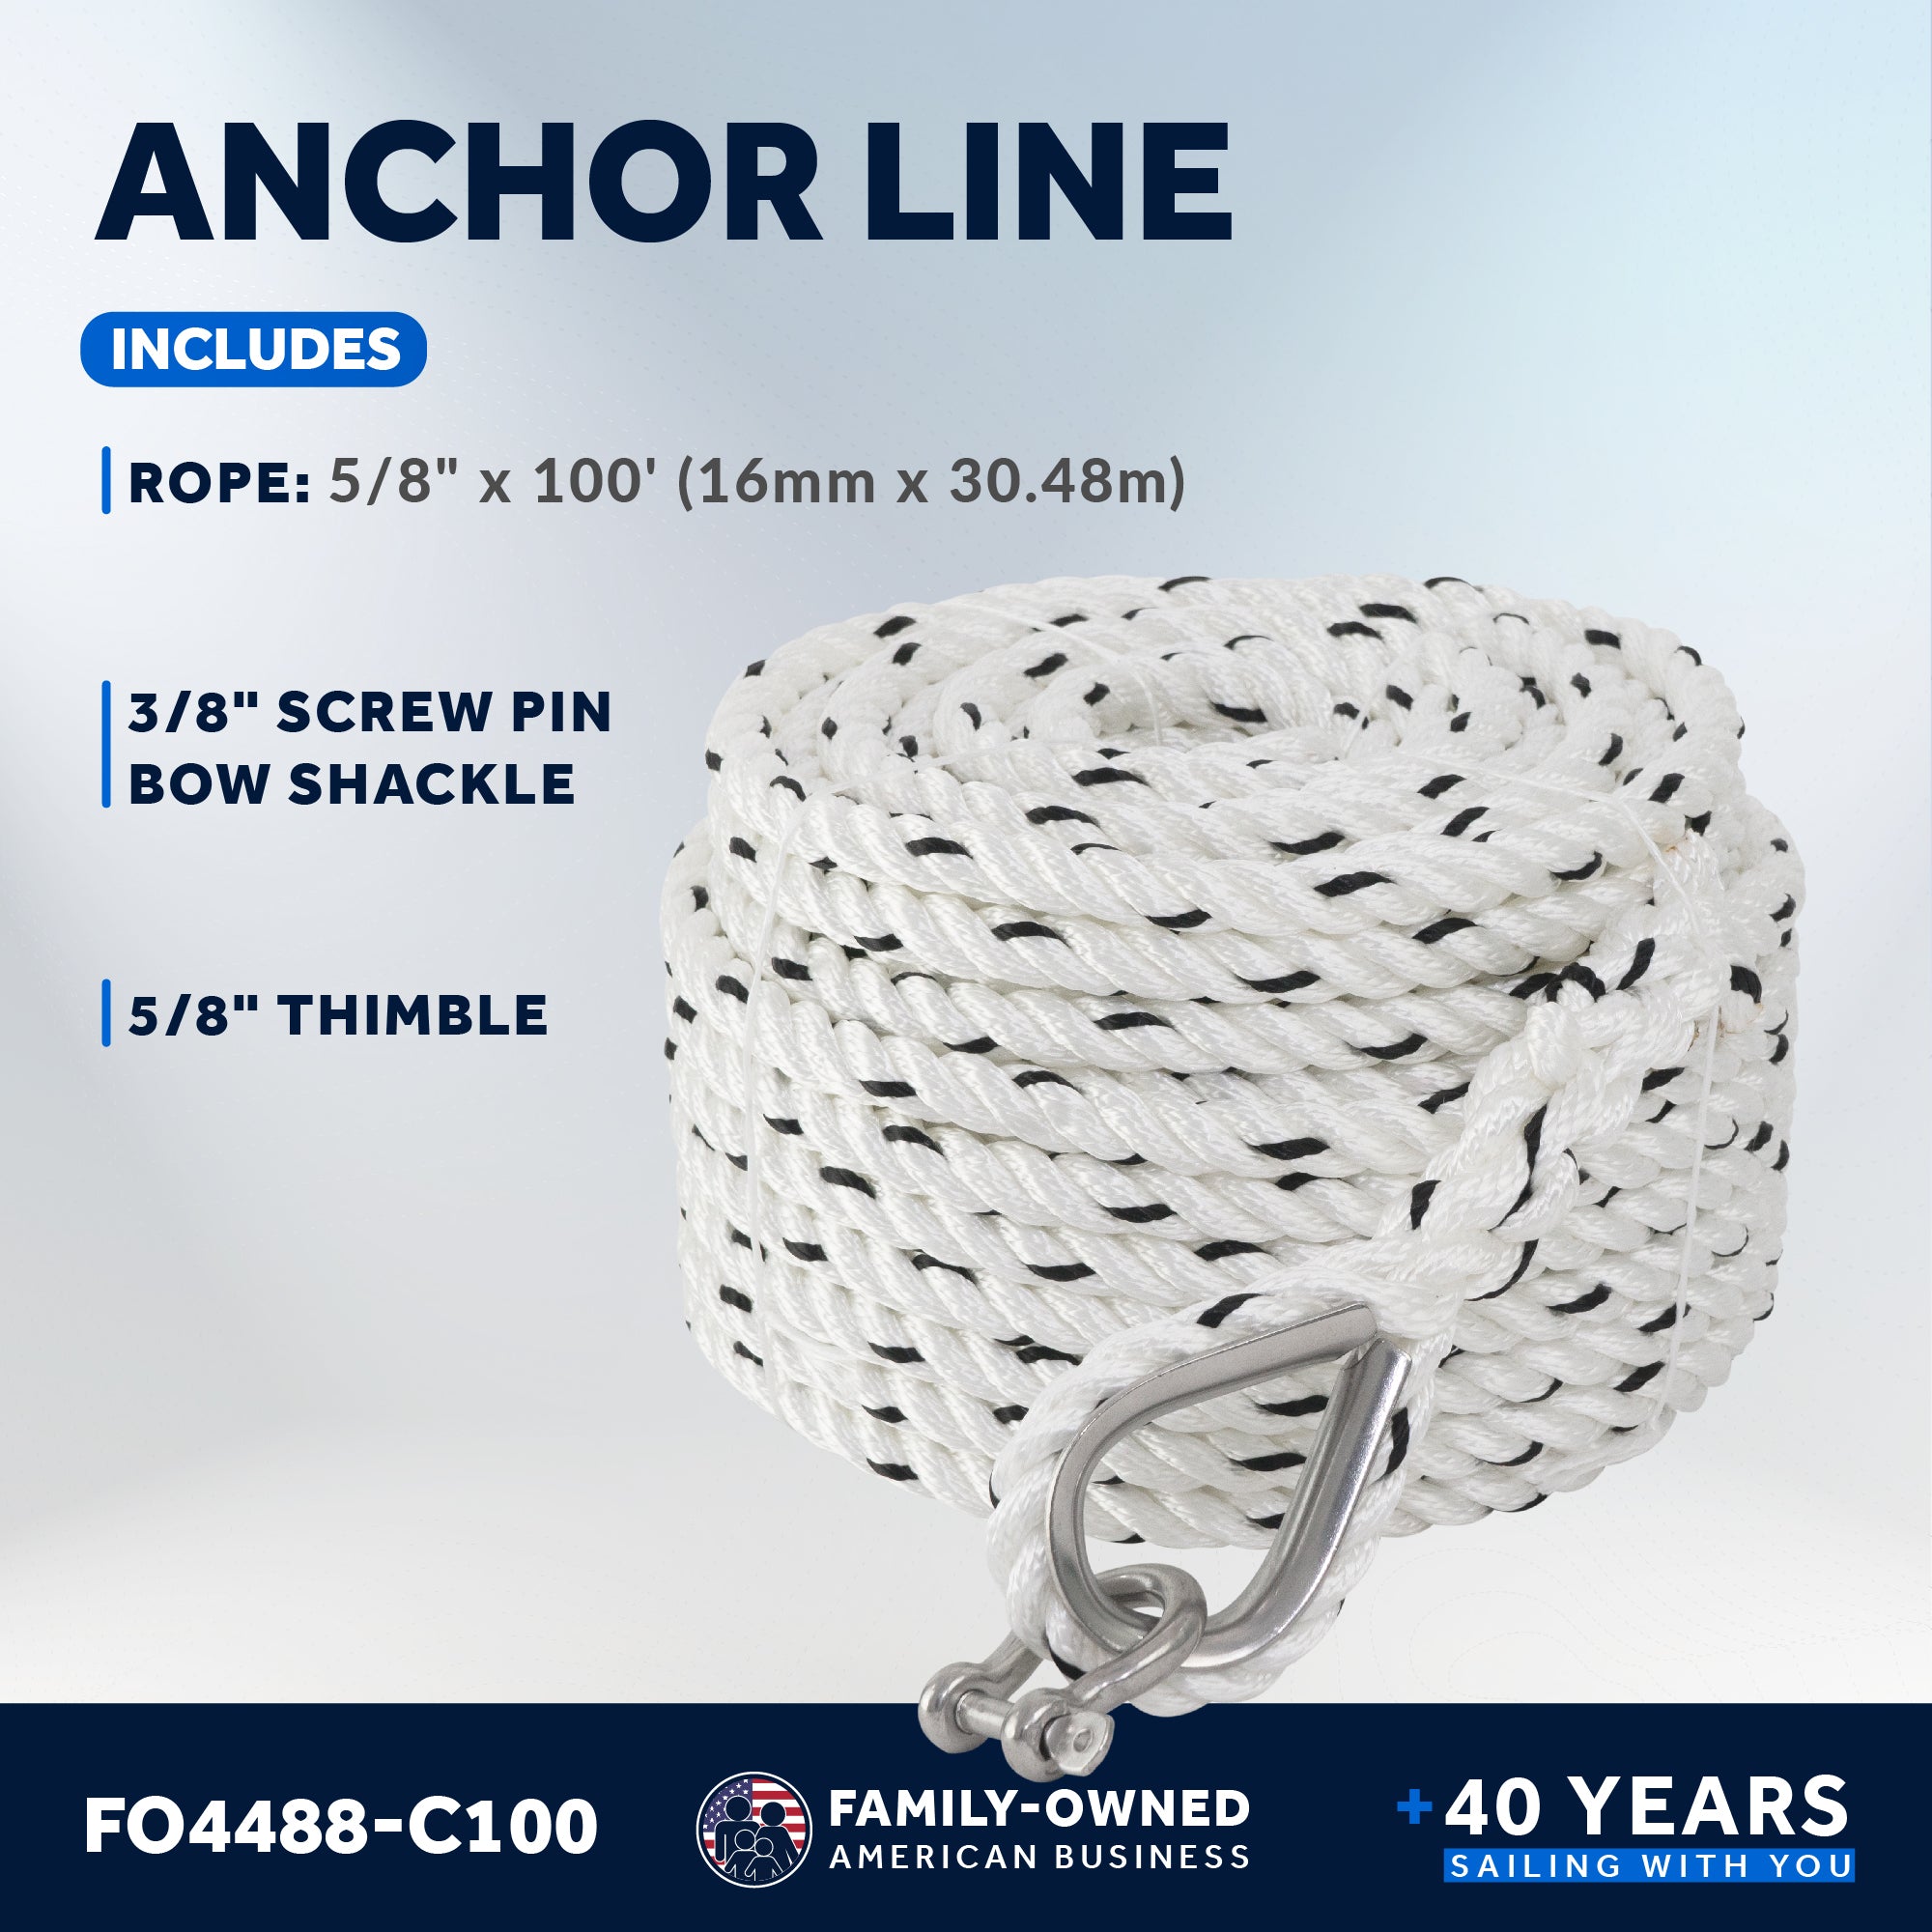 Anchor Line 5/8" x 100', 3-Strand Nylon, Spliced - FO4488-C100